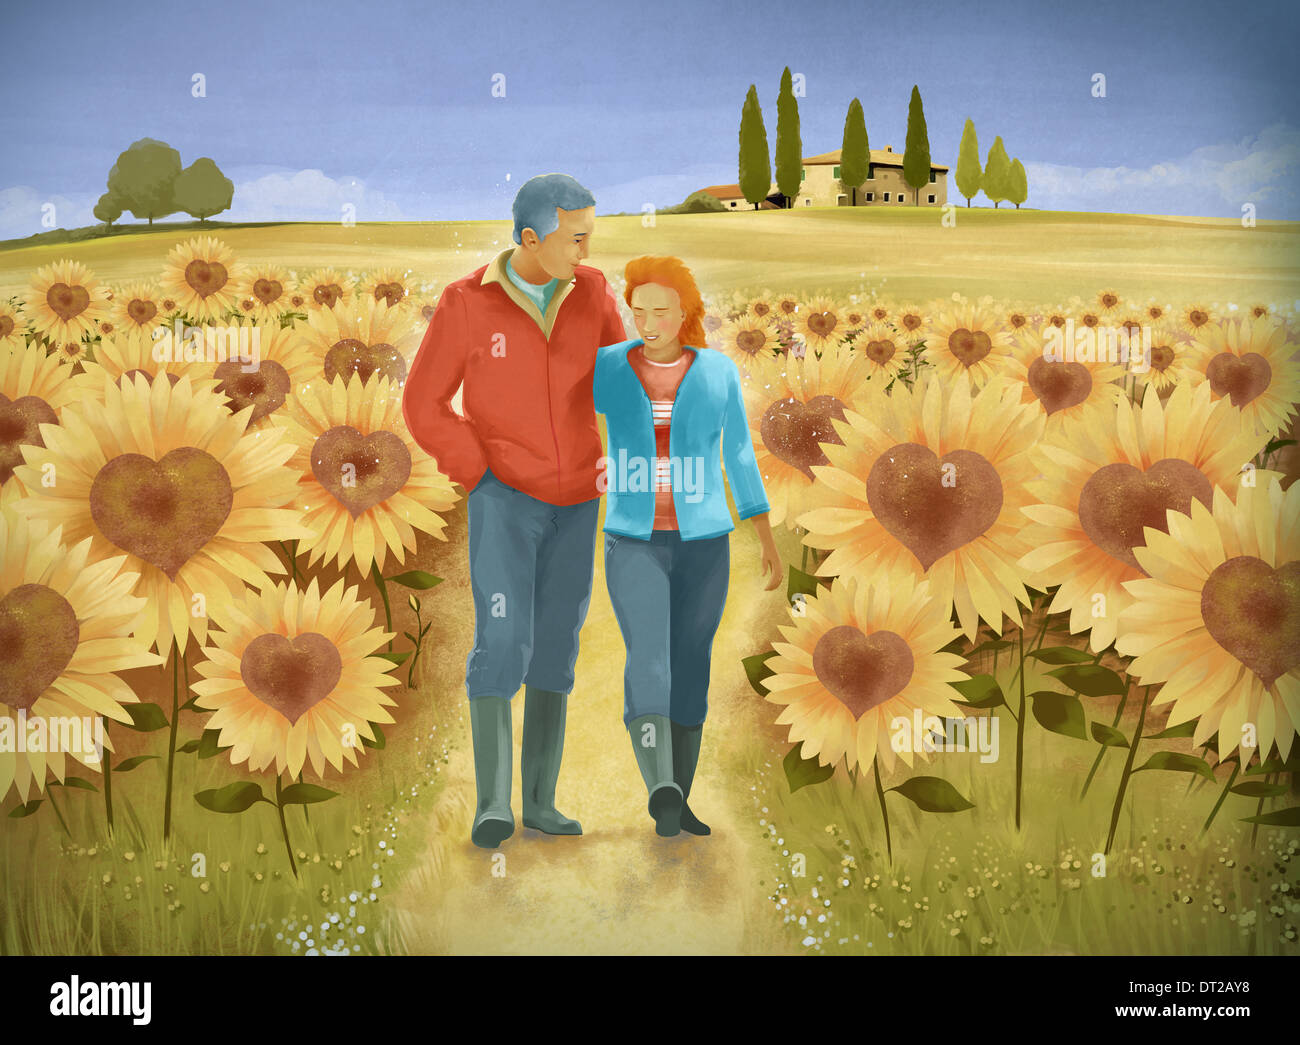 Illustrative image of senior couple walking in sunflower field representing happy retired life Stock Photo